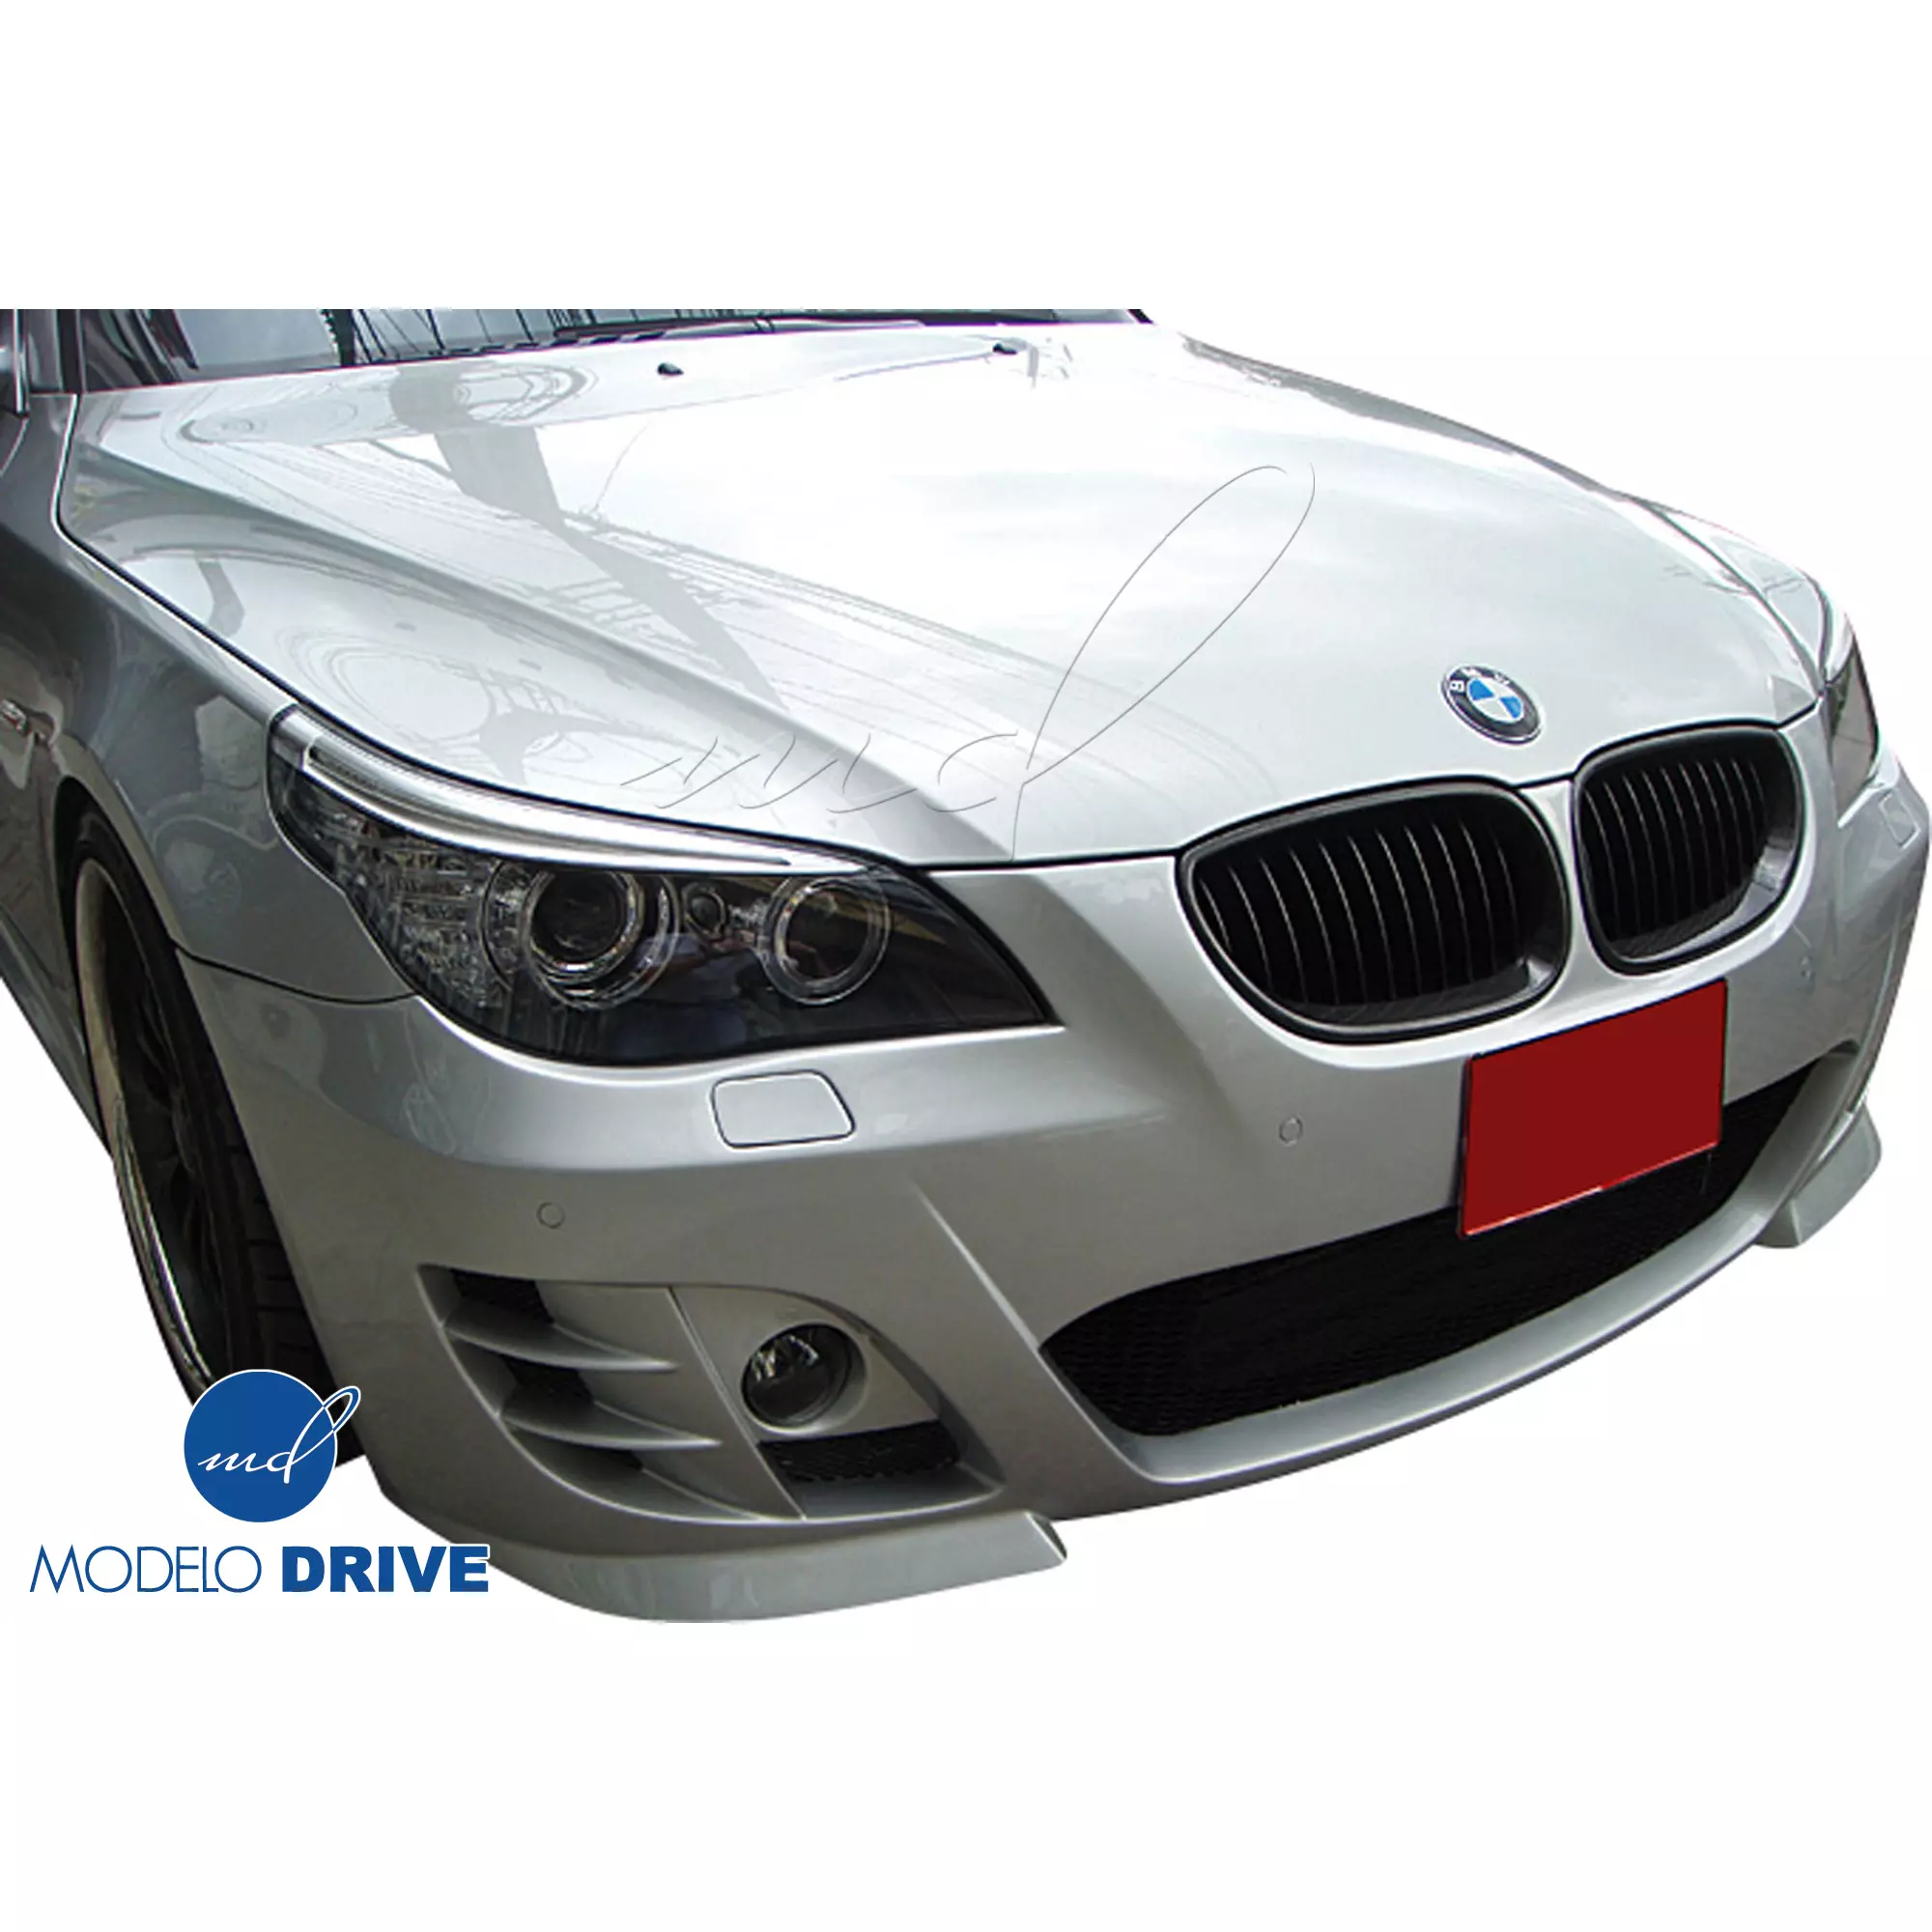 ModeloDrive FRP KERS Body Kit 4pc > BMW 3-Series E60 2004-2010 > 4dr - Image 4